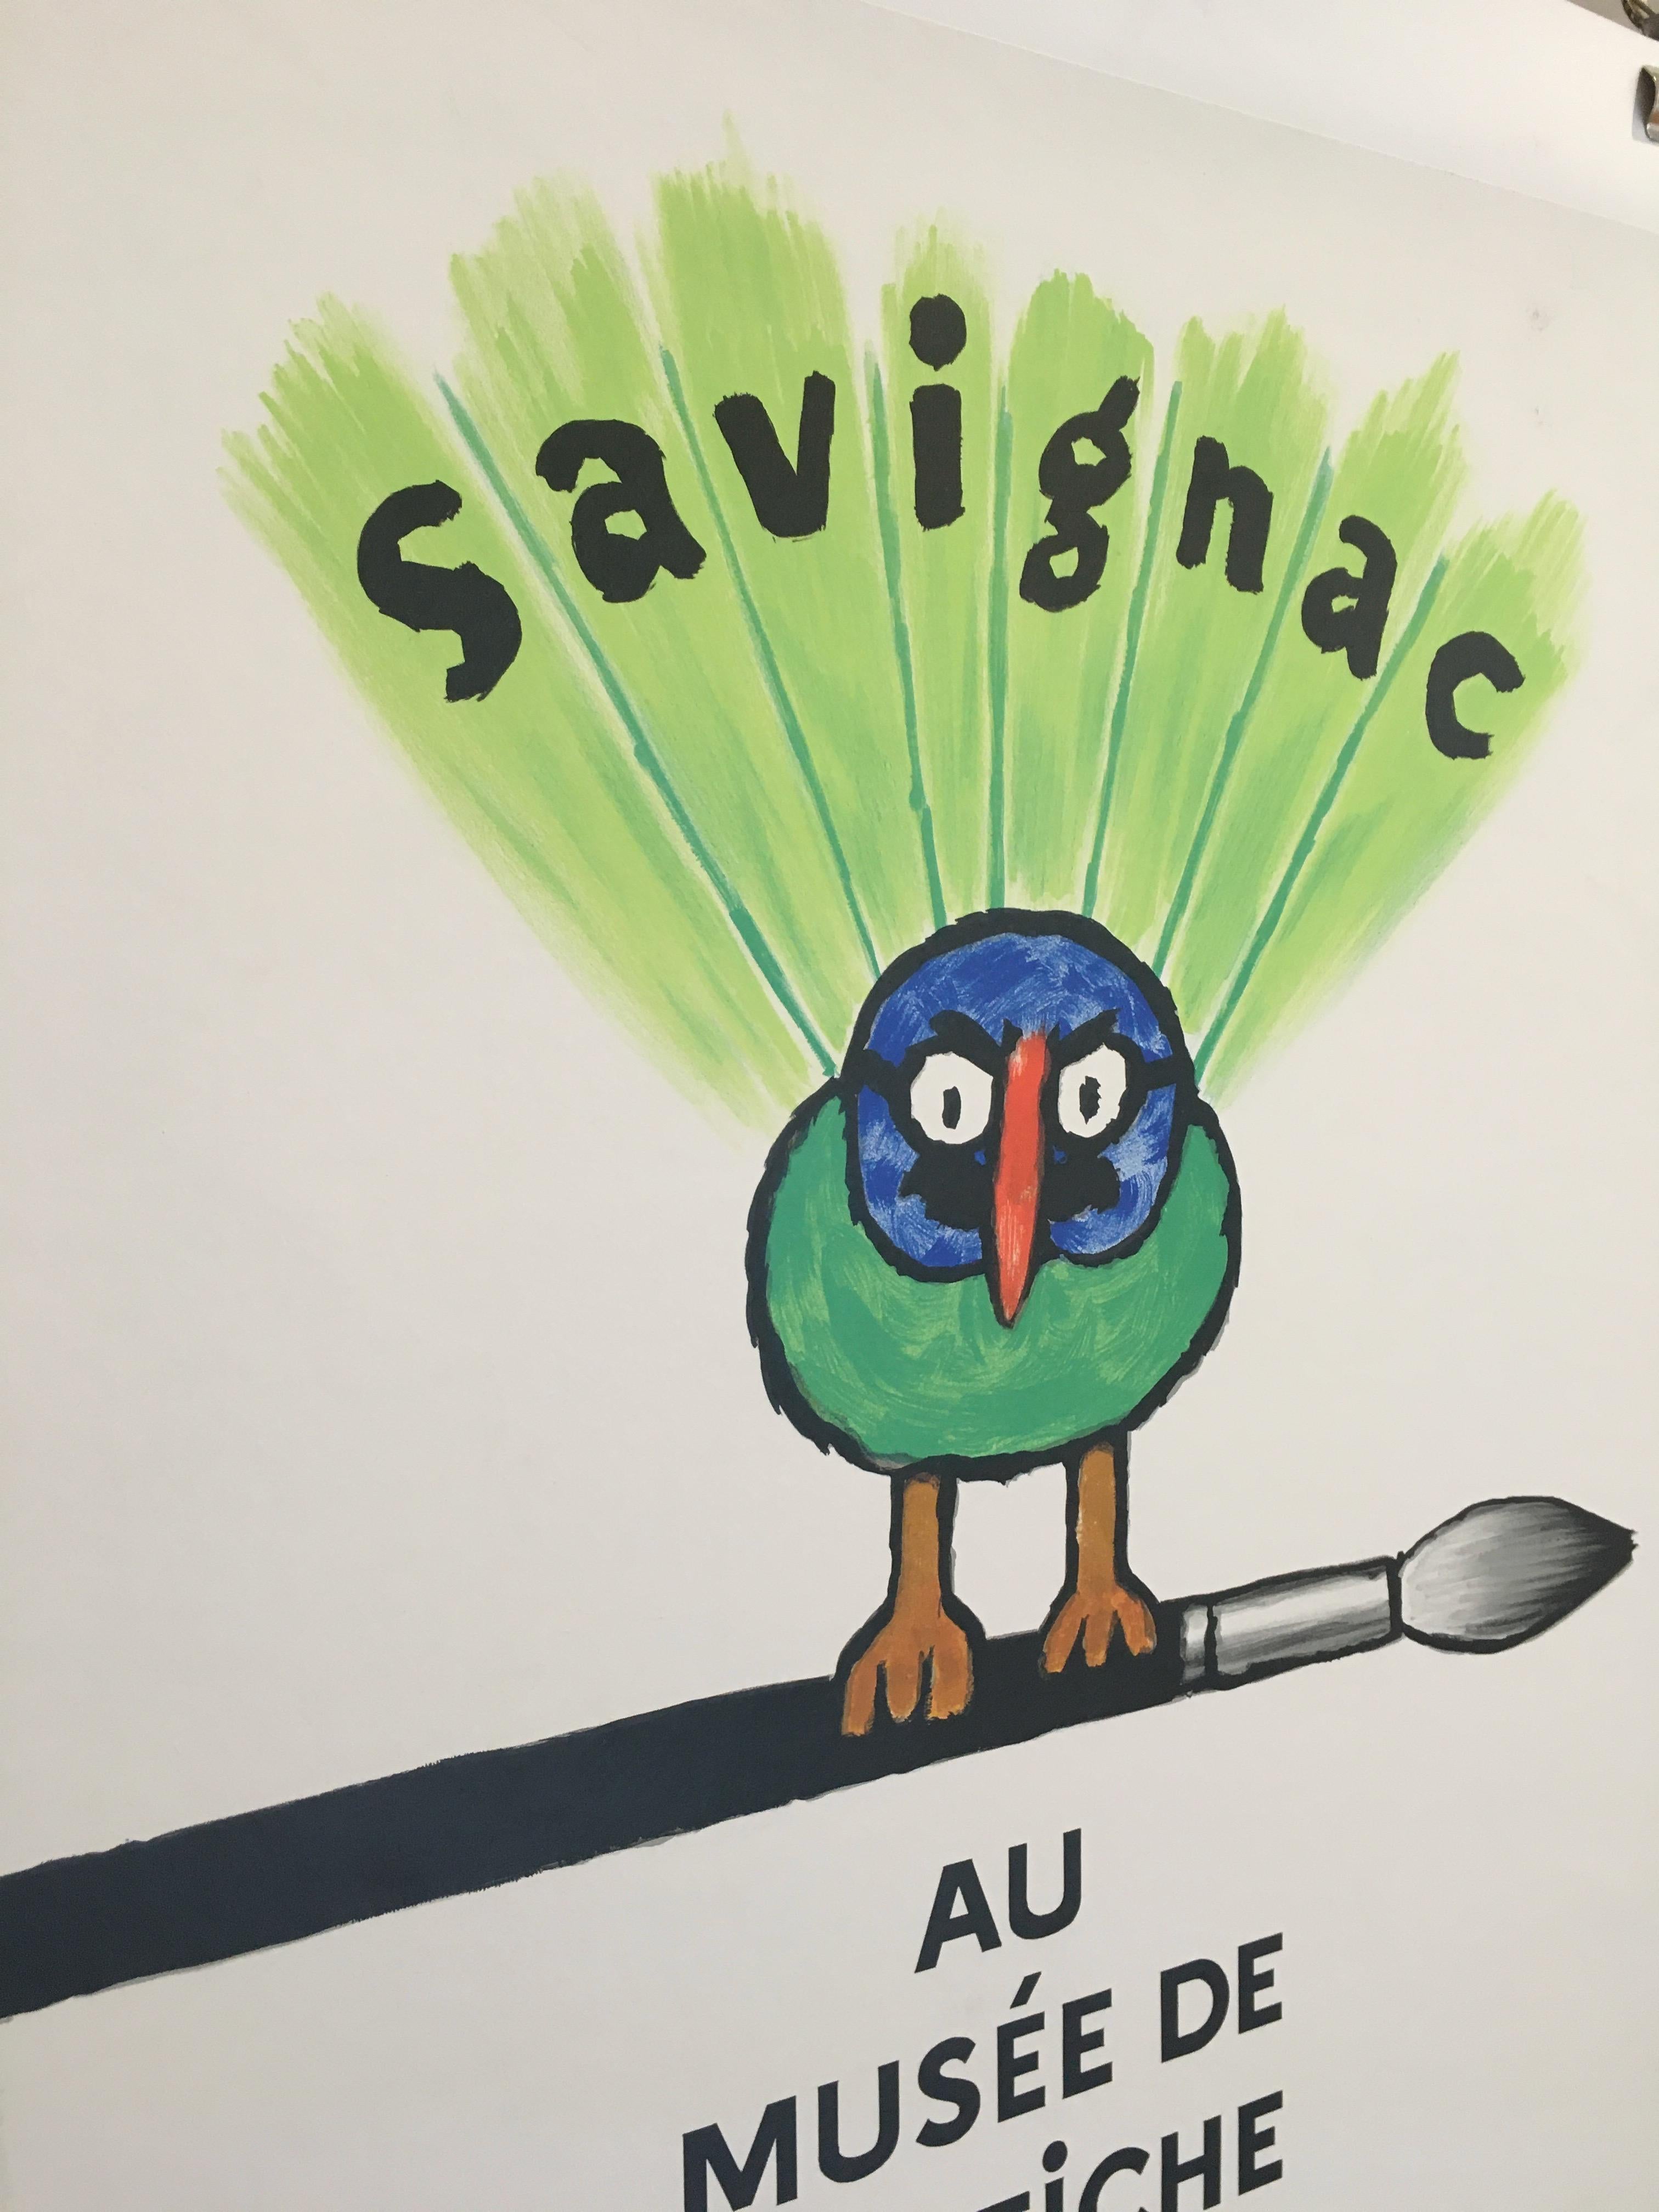 Late 20th Century Savignac Bird 'Au Musee De L’Affich' Original Vintage French Exhibition Poster For Sale